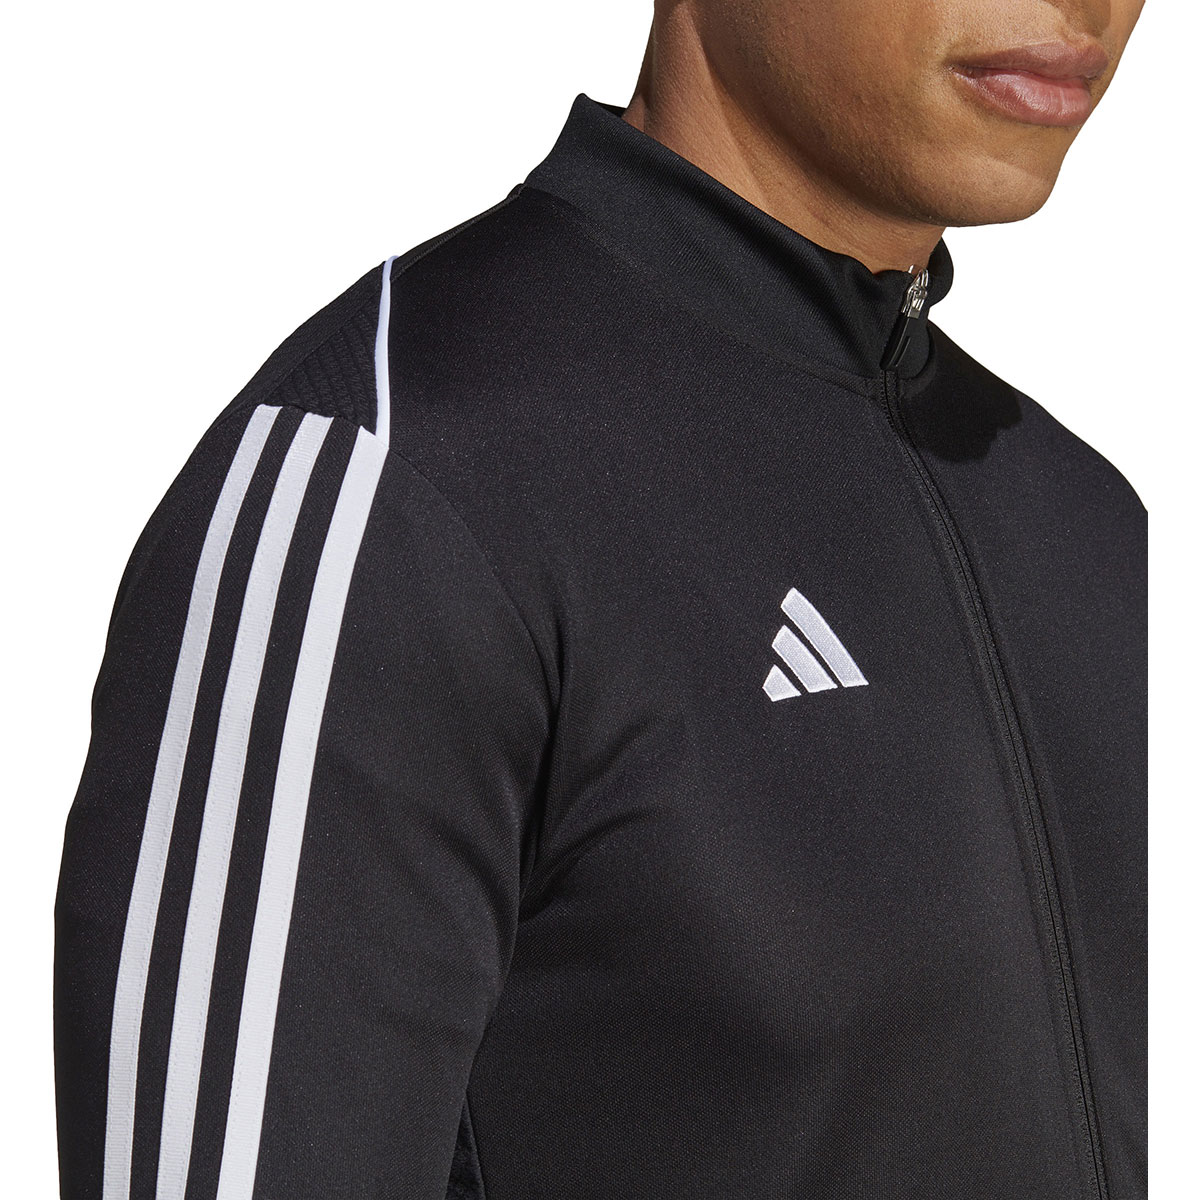 Adidas Herren Trainingsjacke Tiro 23 schwarz